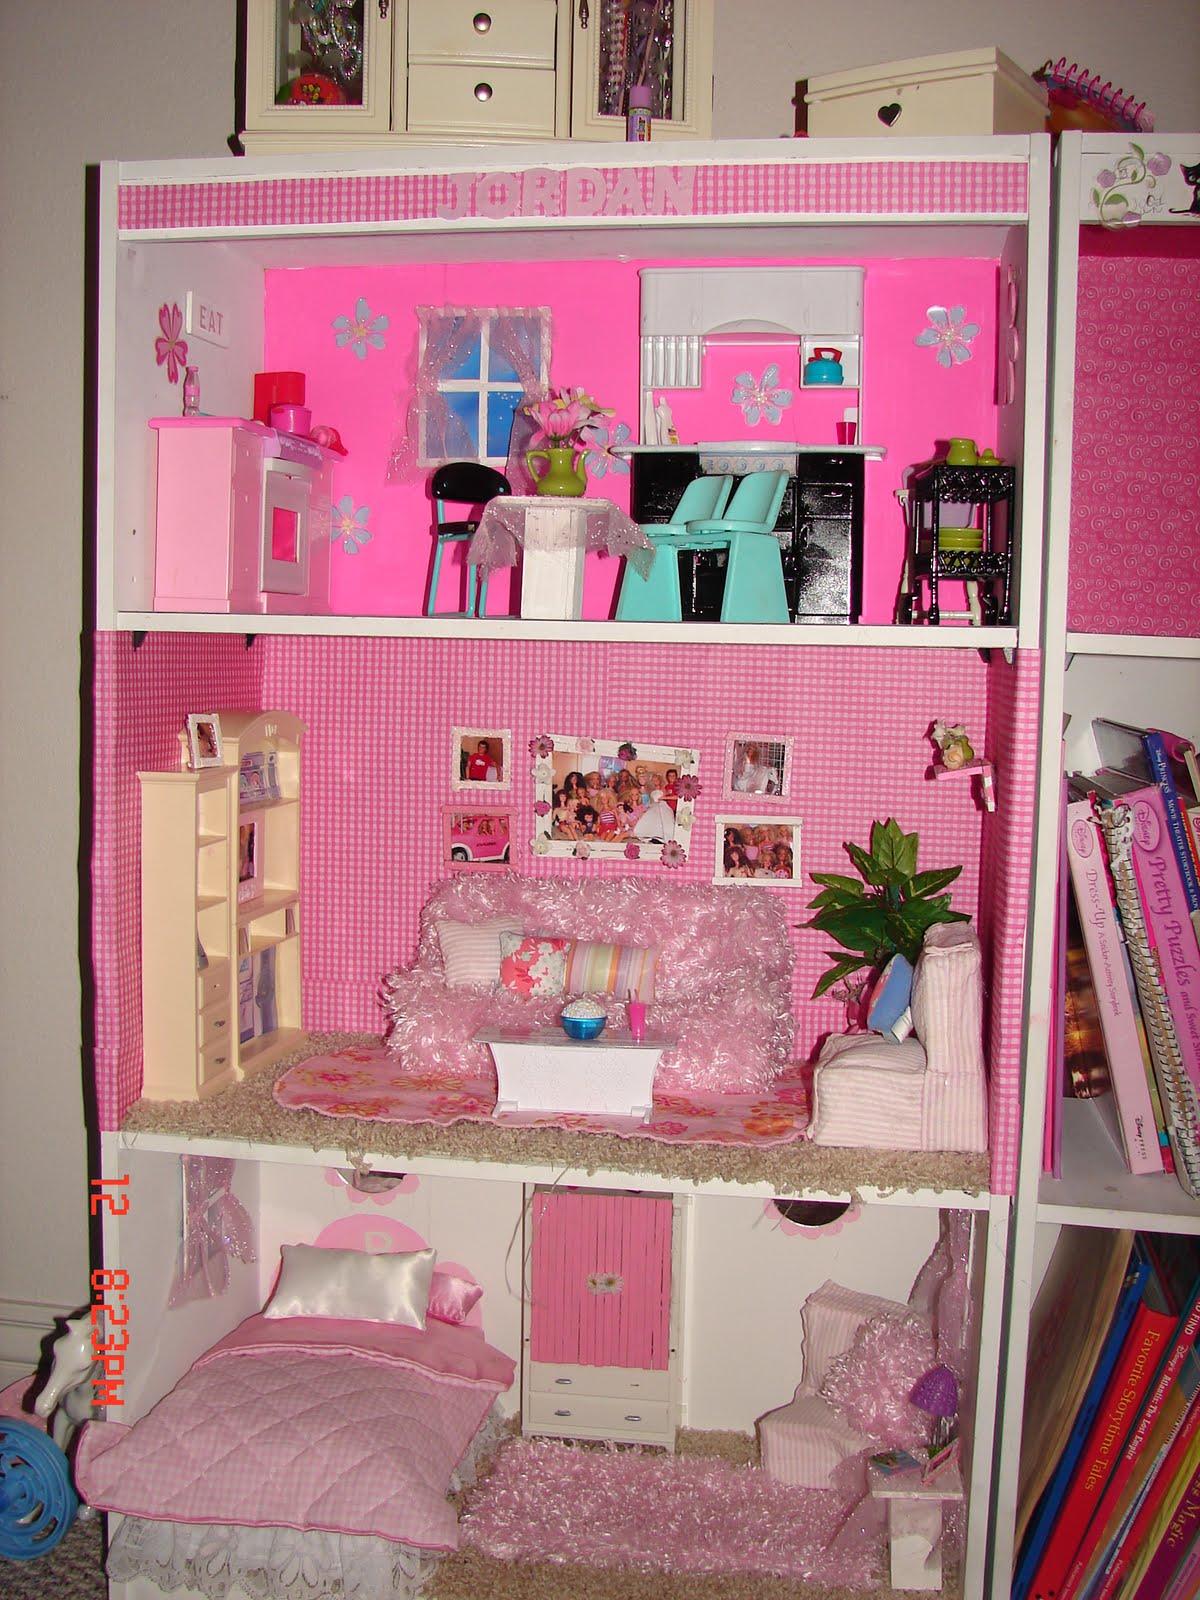 DIY Barbie House from a shelf girl and a glue gun